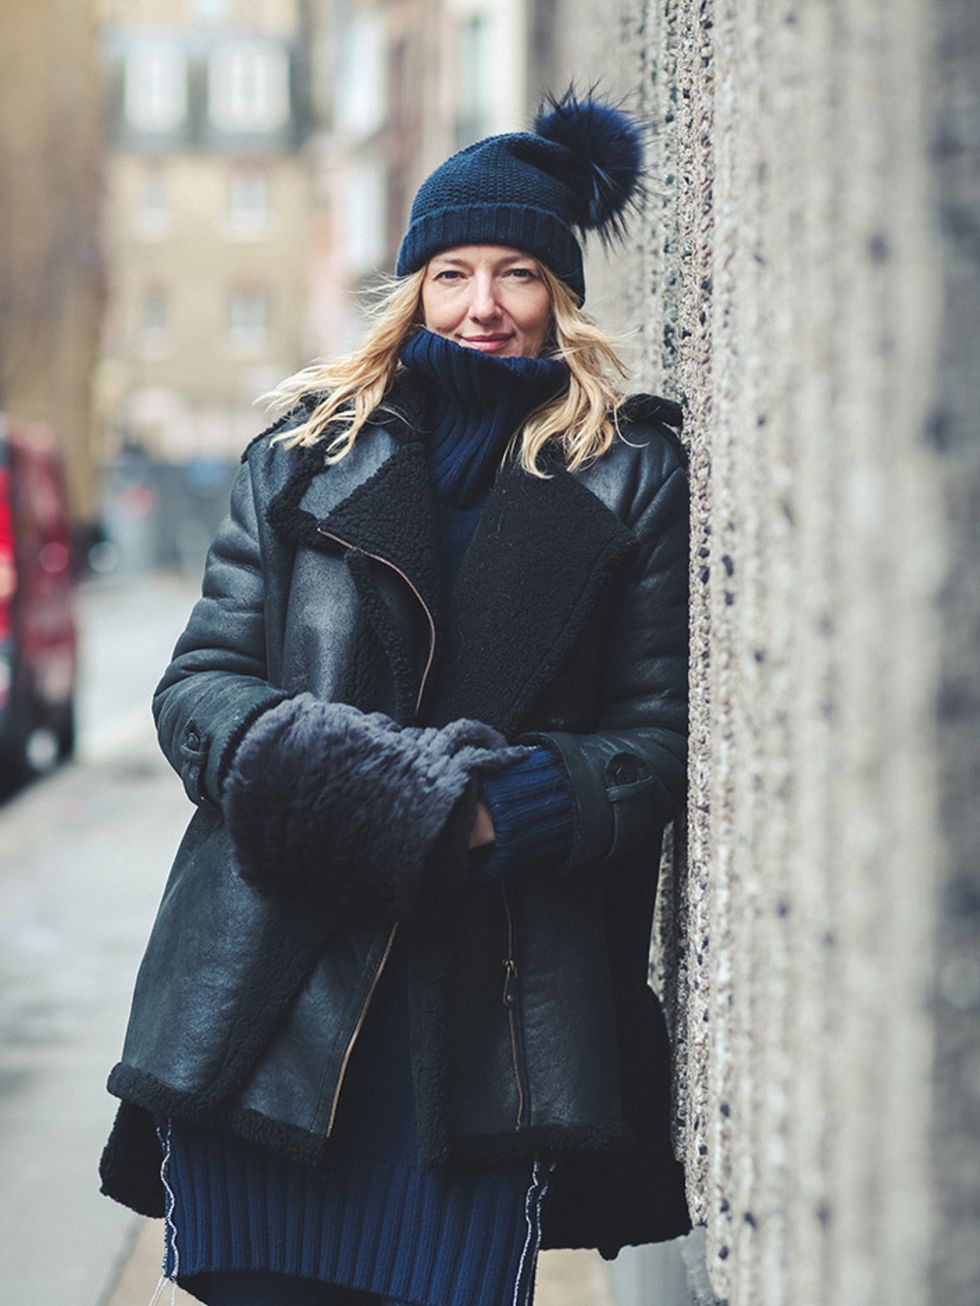 <p>Rebecca Lowthorpe  ELLE Collections Editor/Assistant Editor ELLE.</p>

<p>Inverni hat, Preen coat, Beretta jeans and Margiela for H&M jumper dress. </p>